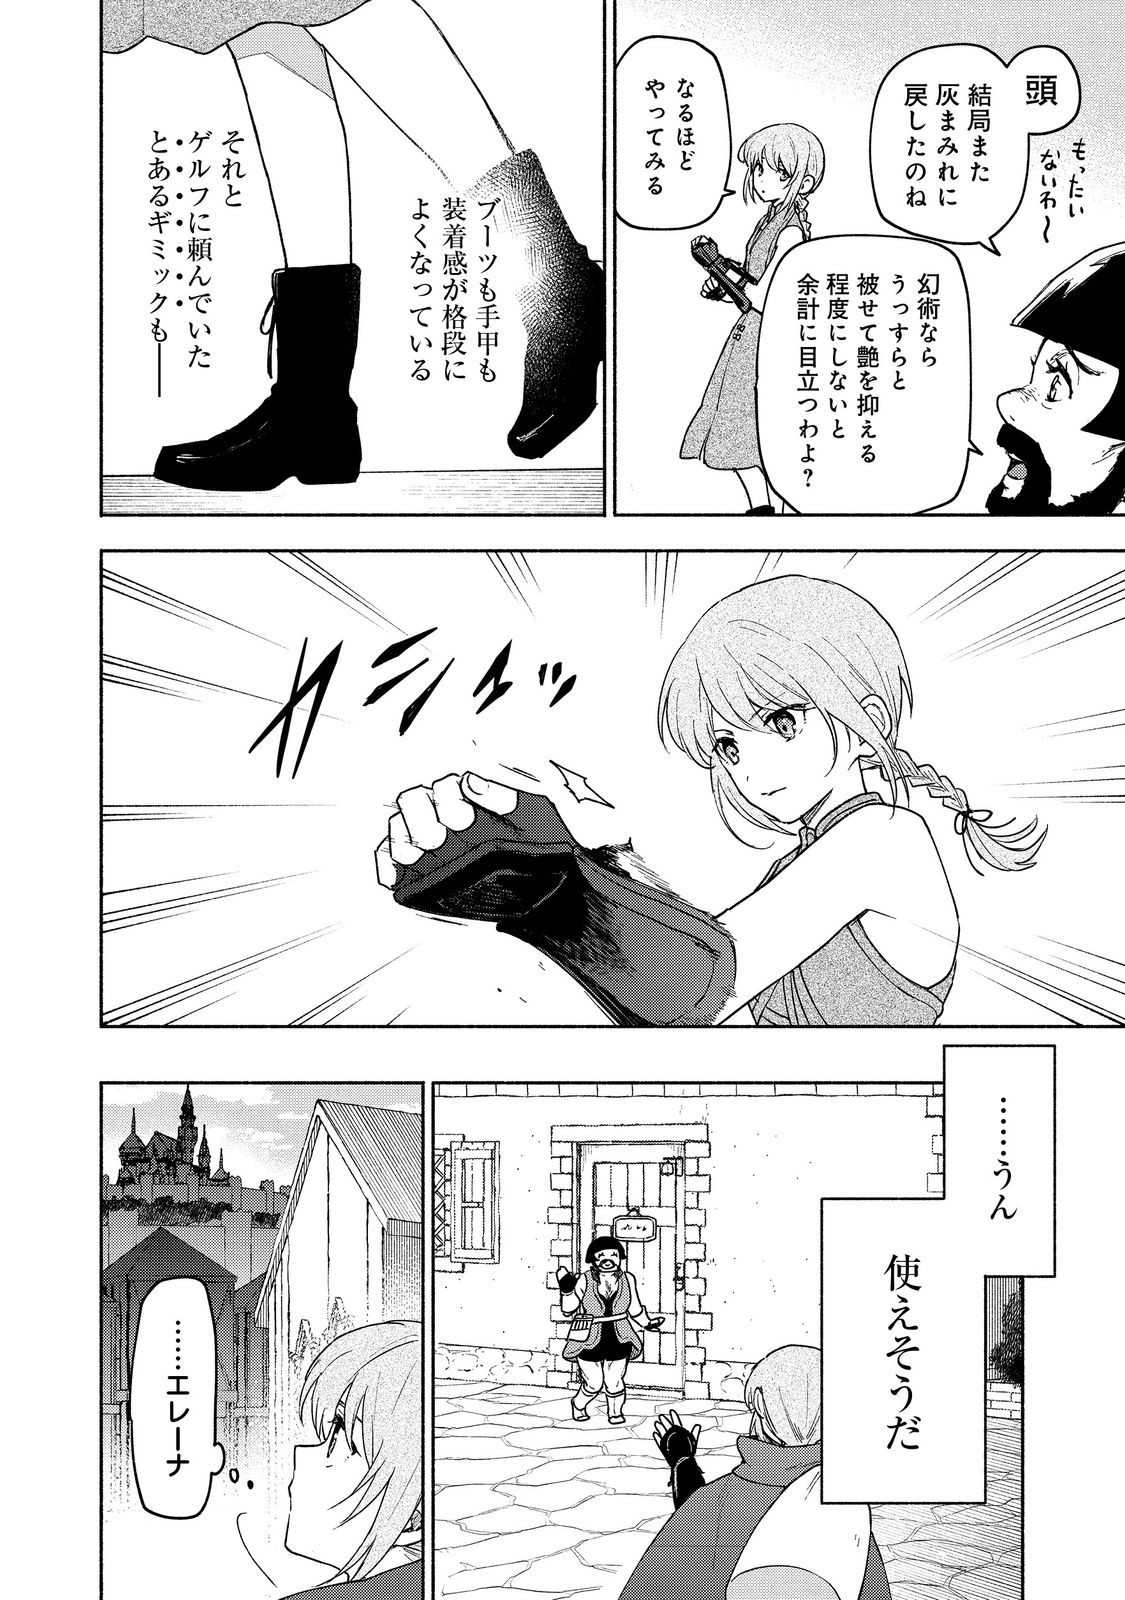 Otome Game no Heroine de Saikyou Survival - Chapter 22 - Page 34